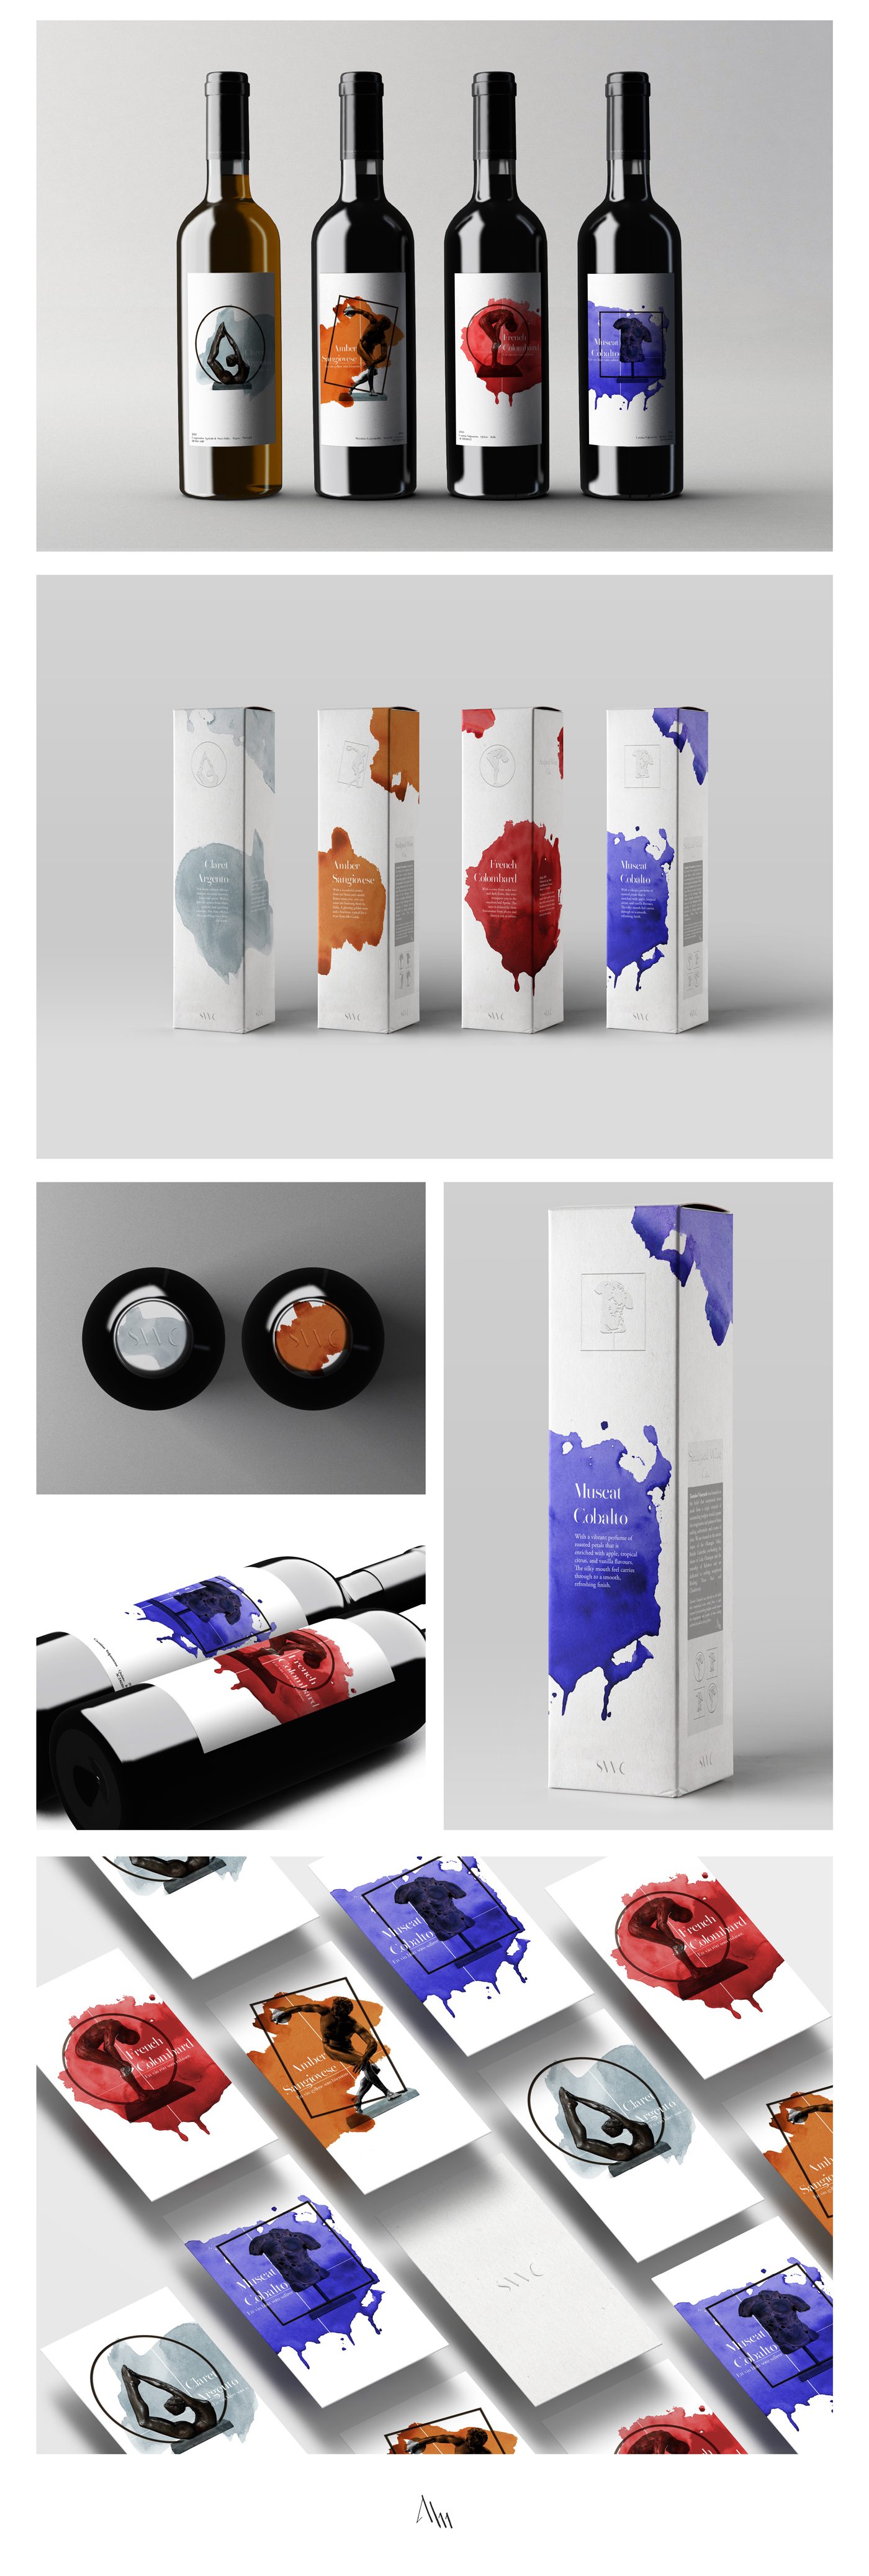 wine design, packaging design, logo design, graphic design, johannes alm